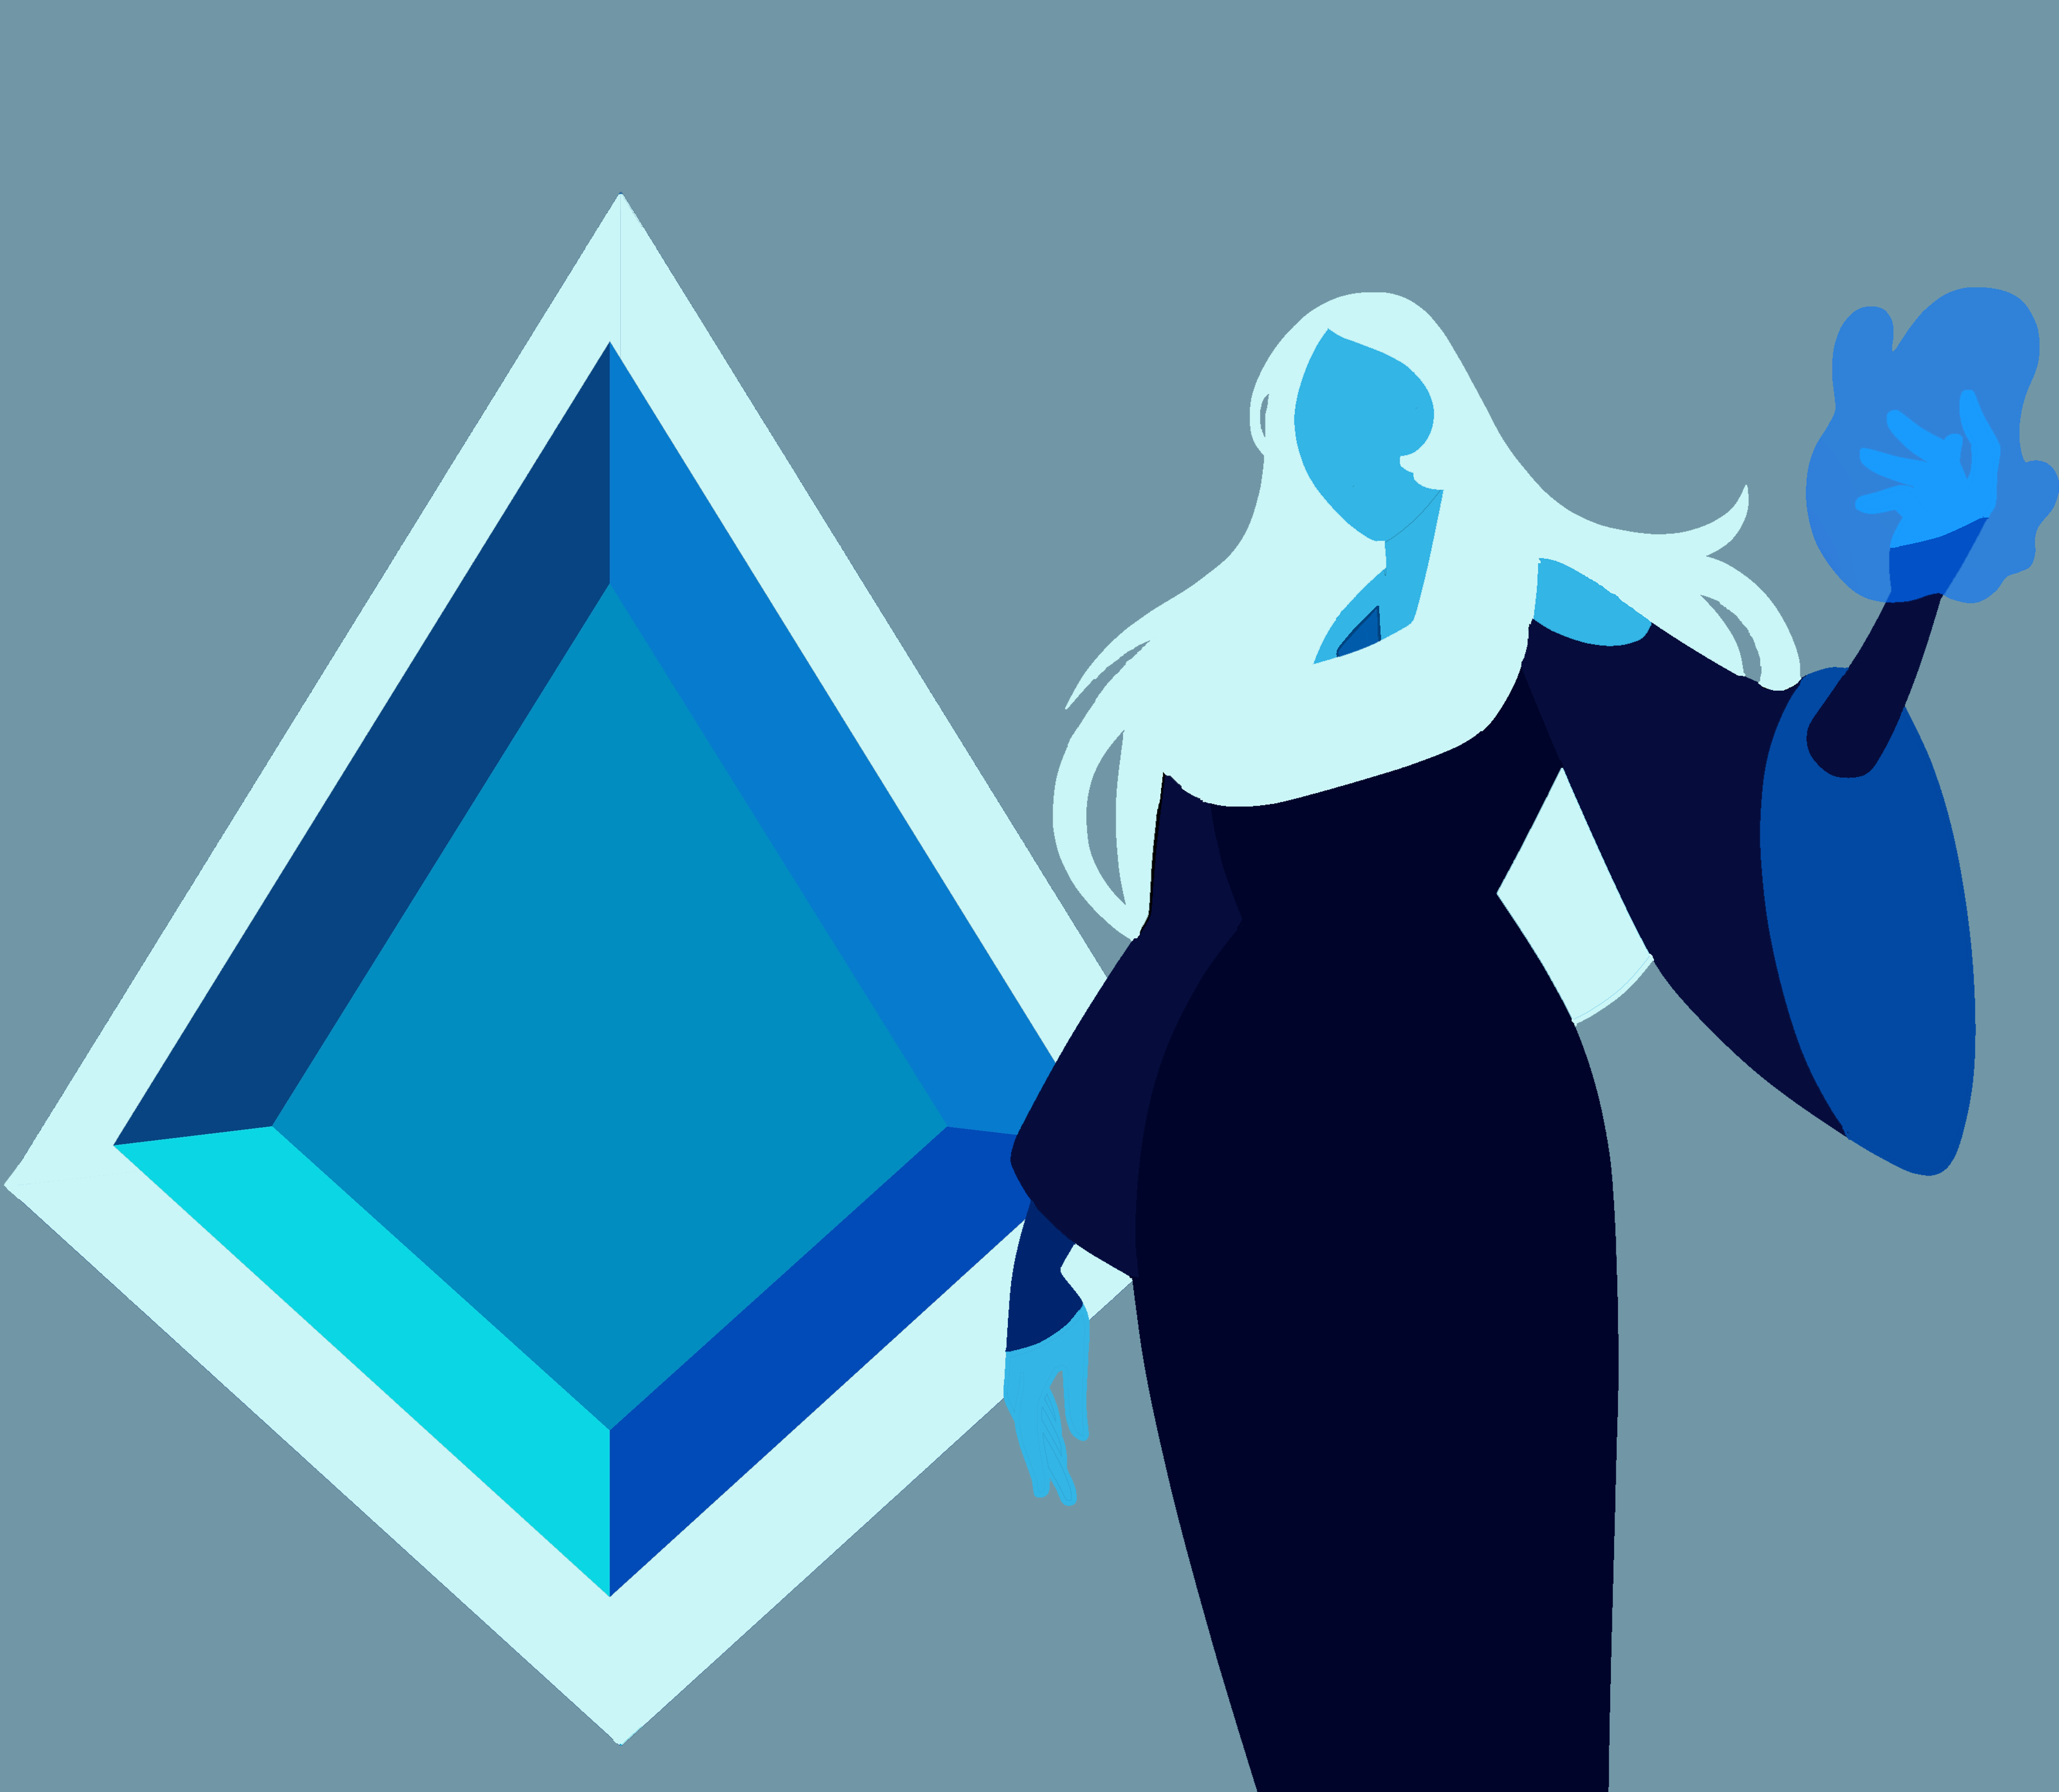 Blue diamond wallpaper steven universe